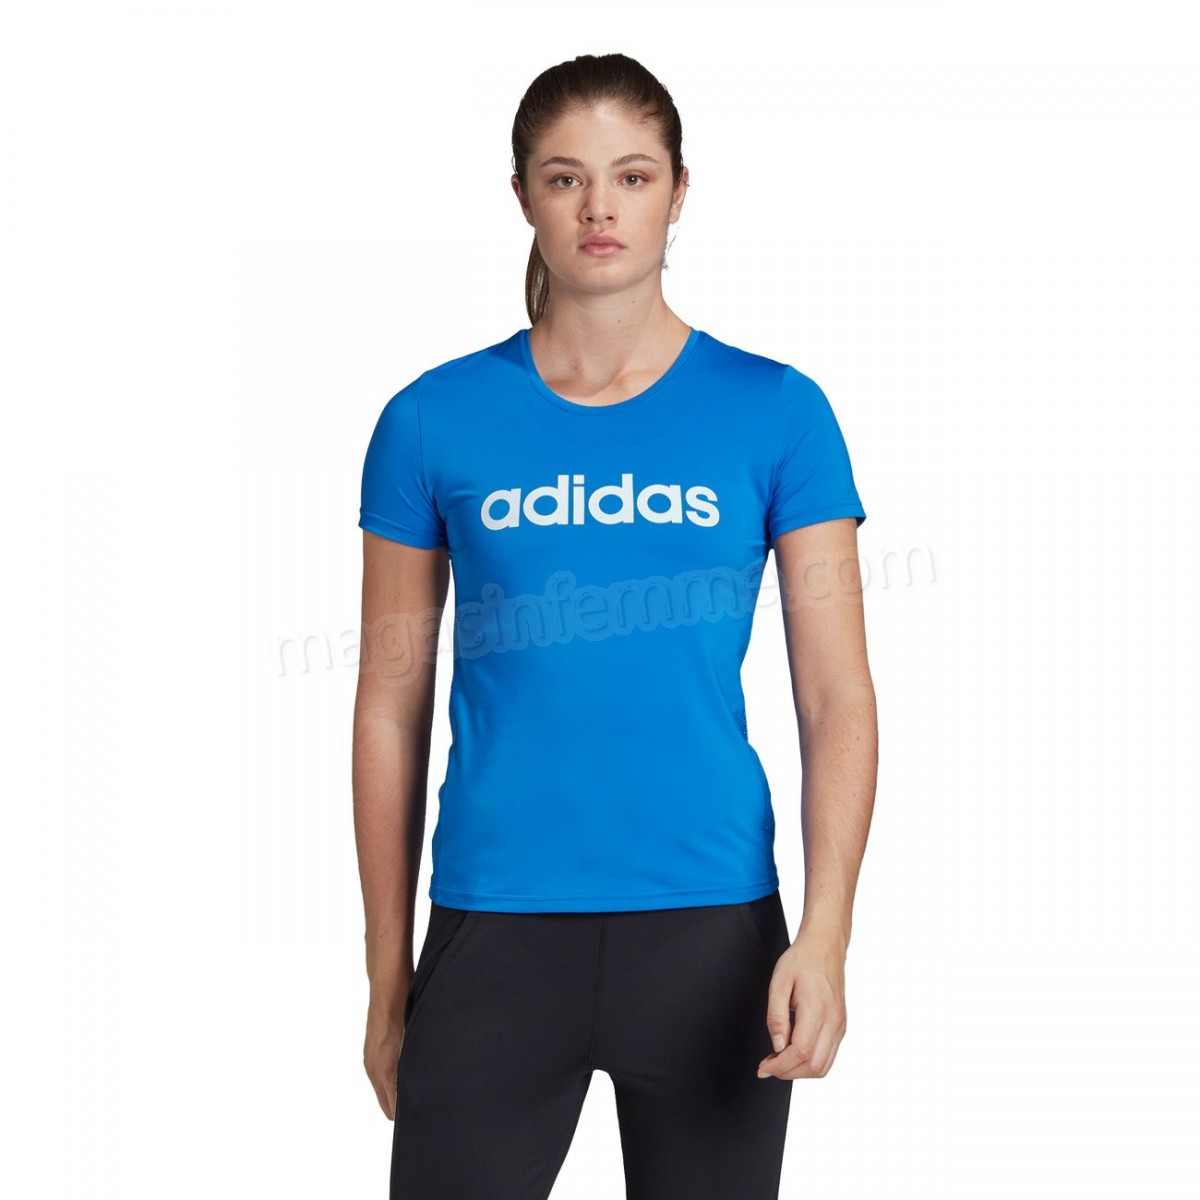 Adidas-Fitness femme ADIDAS T-shirt femme adidas Design 2 Move Logo en solde - -1